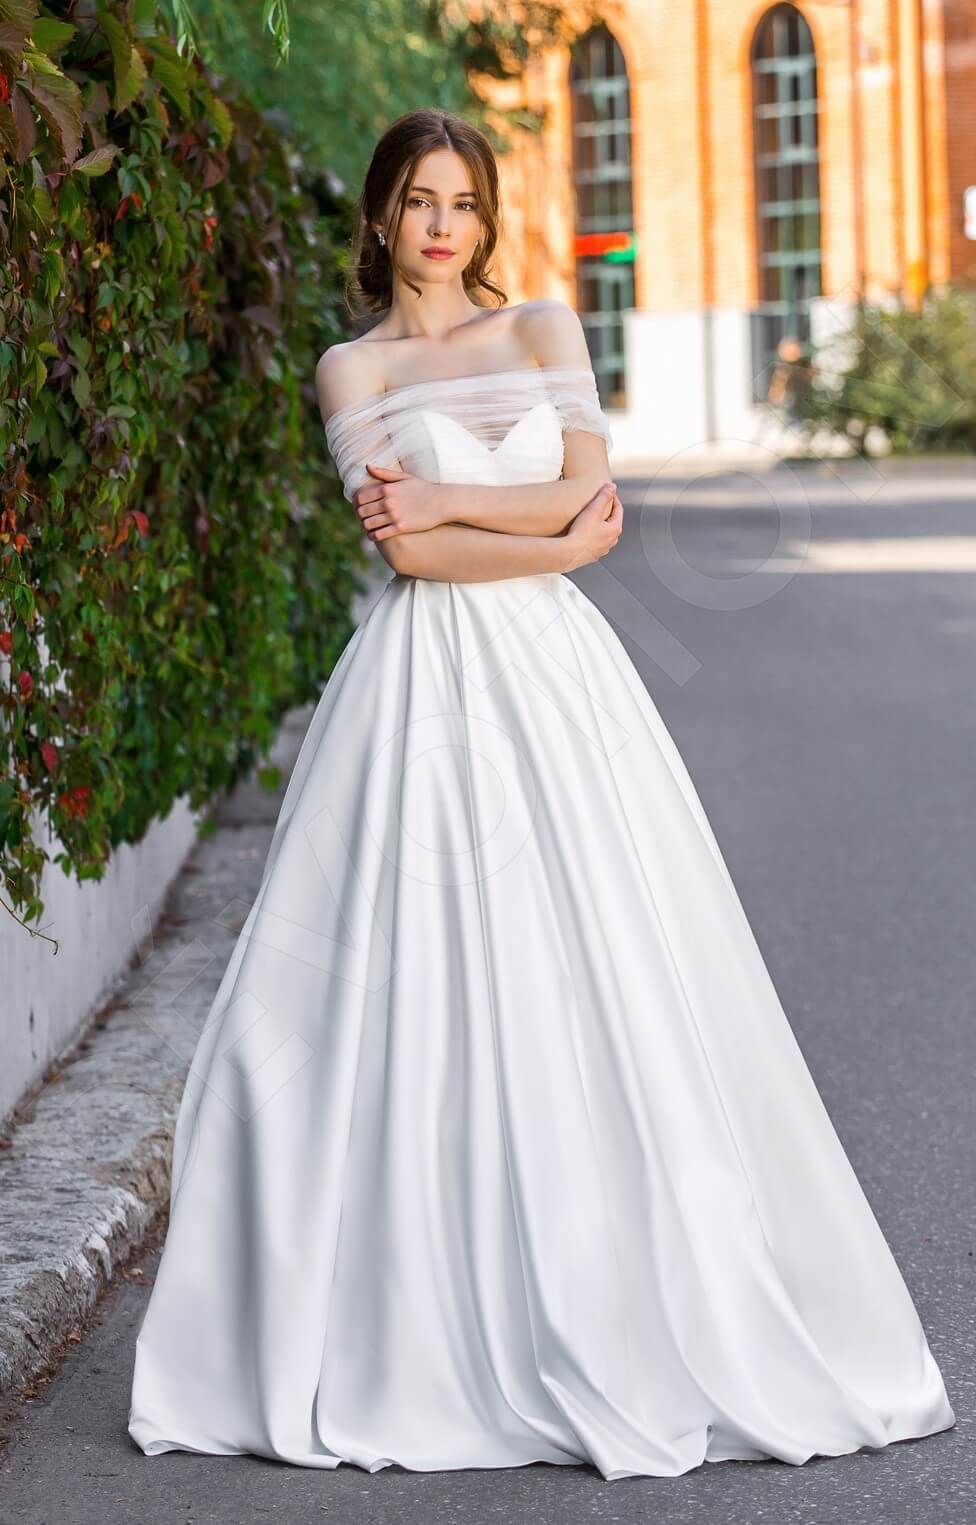 Yatokya Open back A-line Short/ Cap sleeve Wedding Dress Front